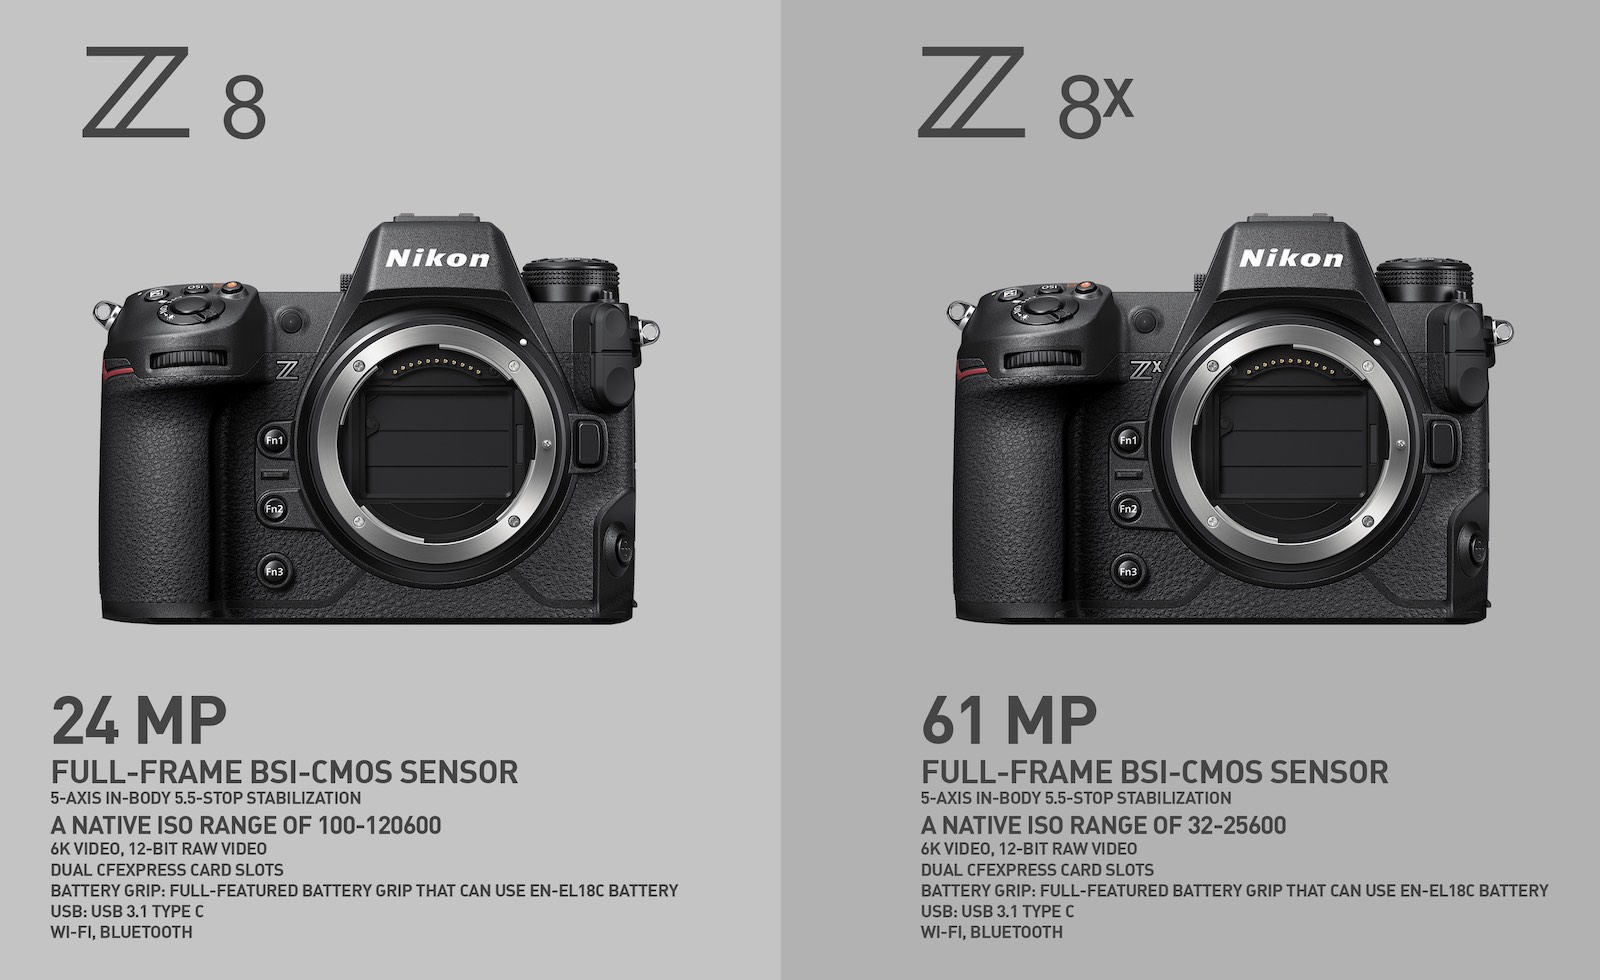 https://photorumors.com/wp-content/uploads/2023/04/Nikon-Z8-and-Nikon-Z8x-camera-specifications-leaked-online.jpeg